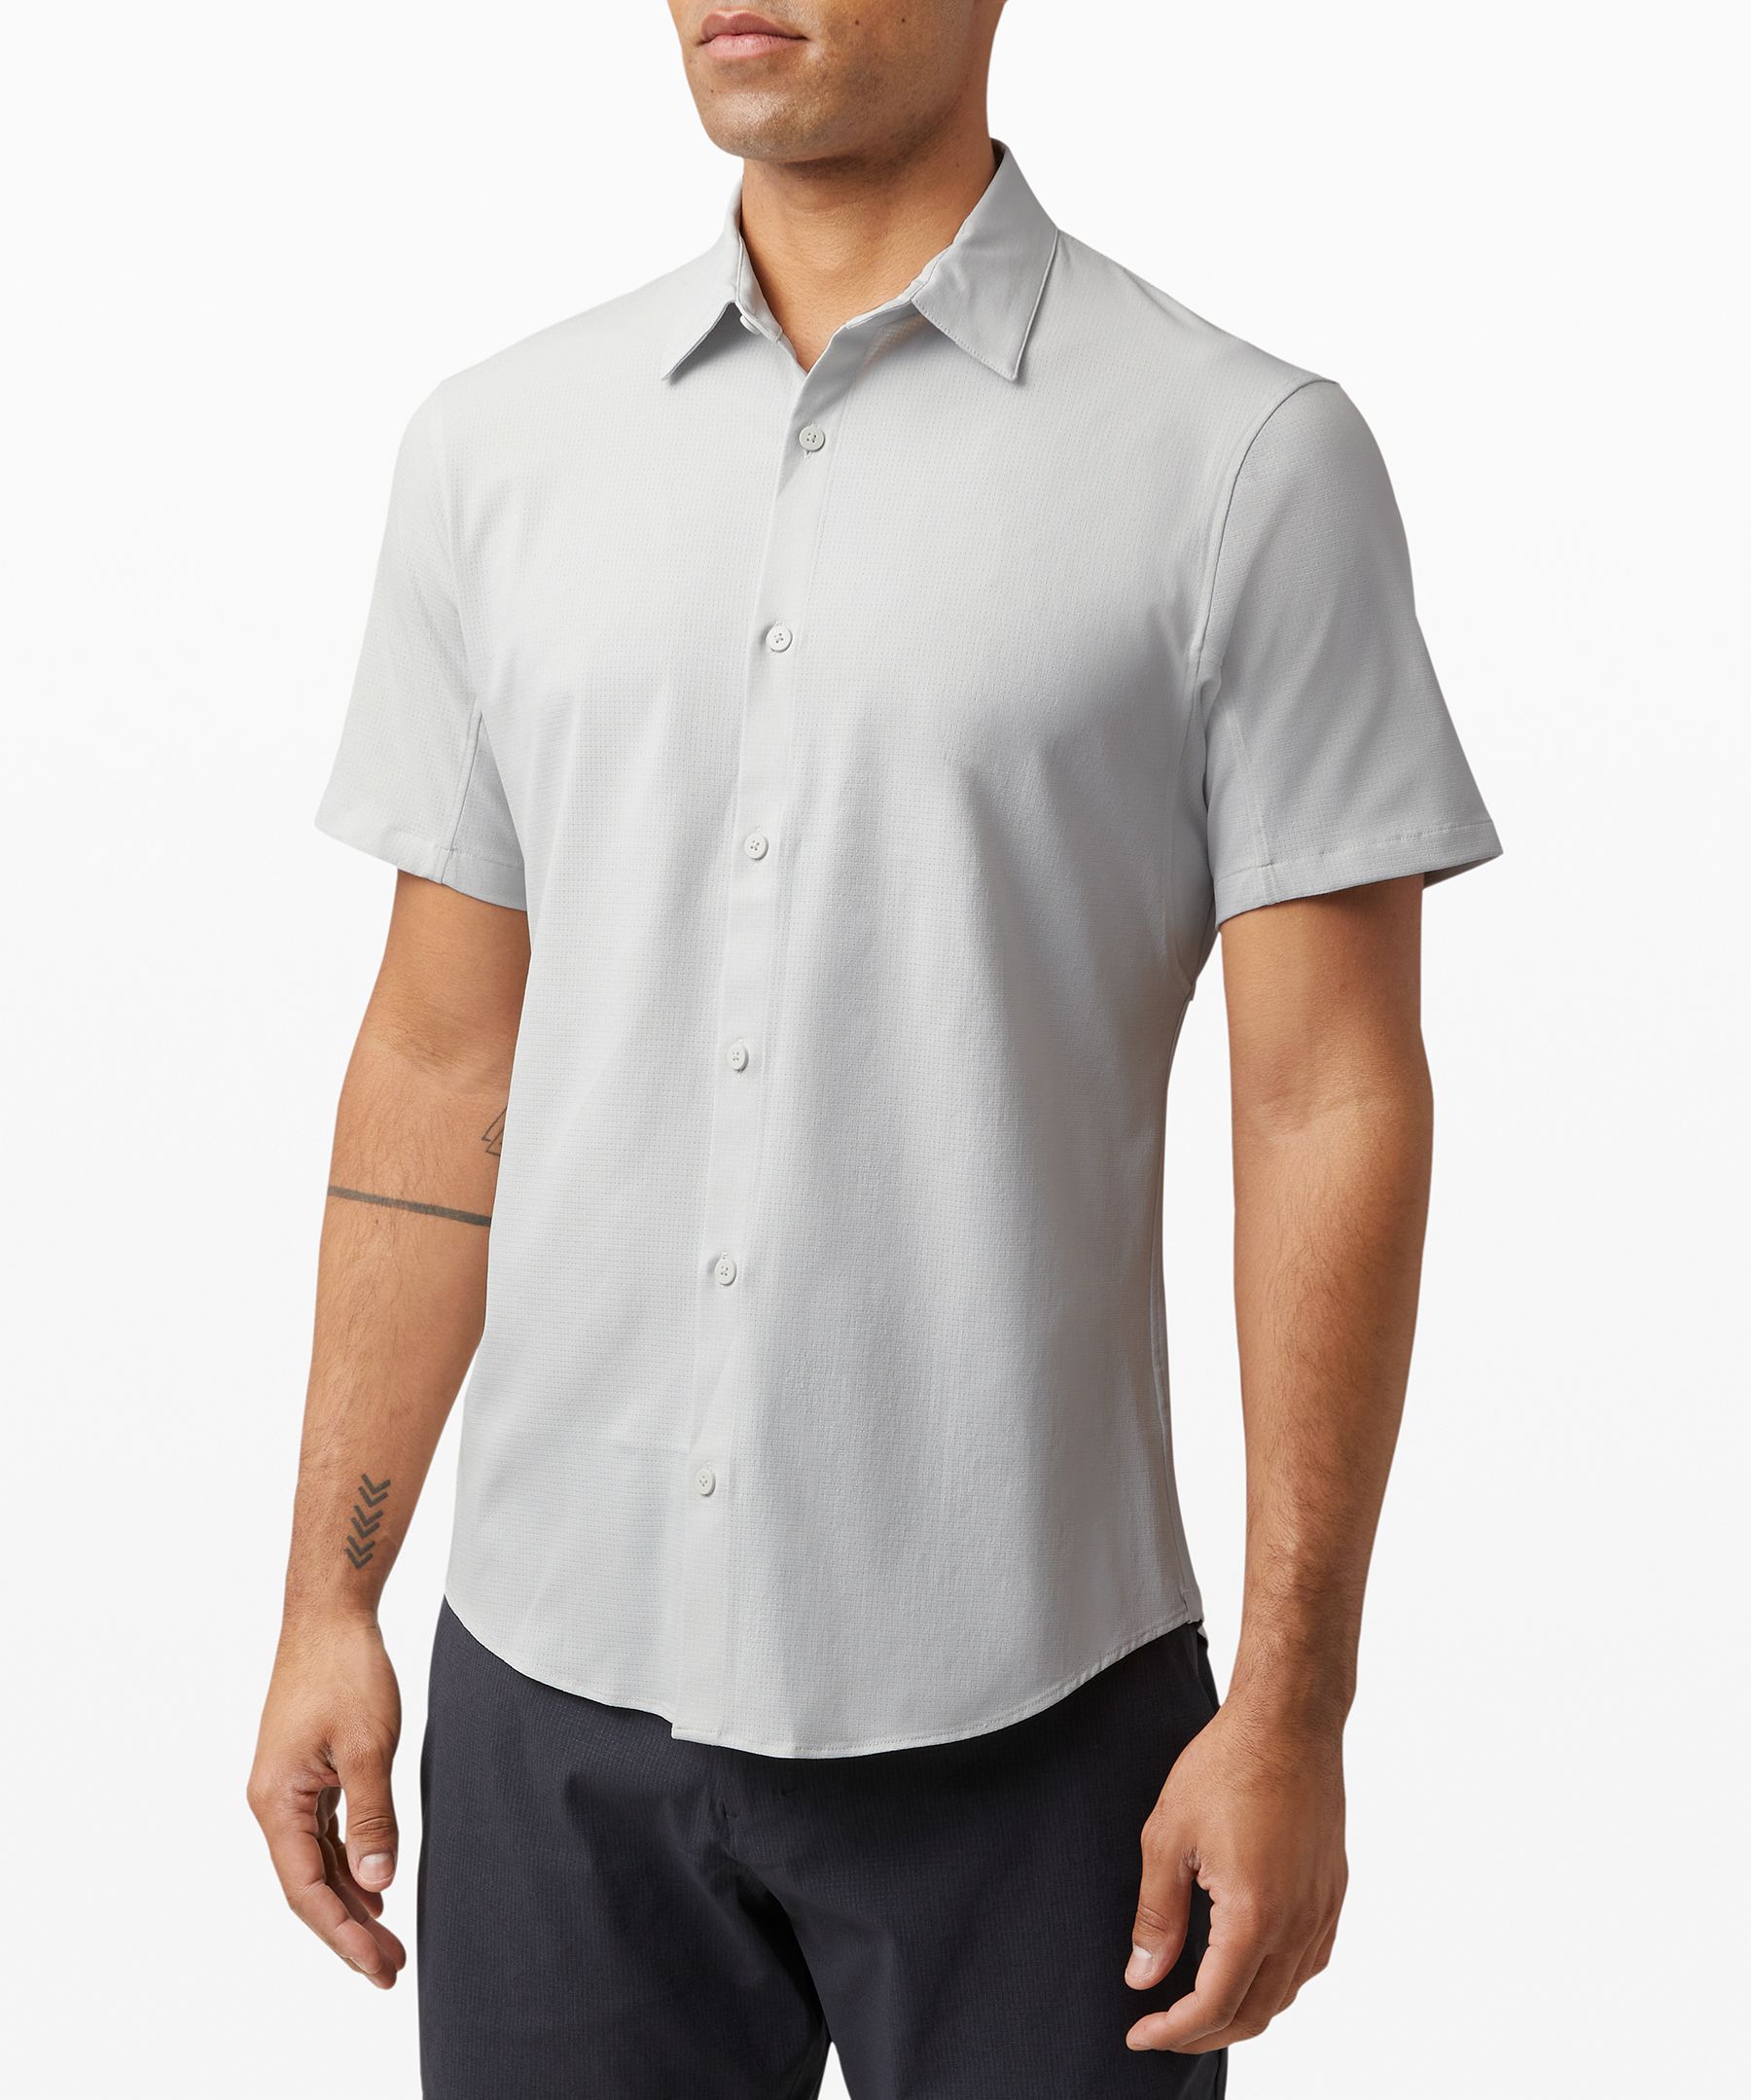 lululemon short sleeve shirt